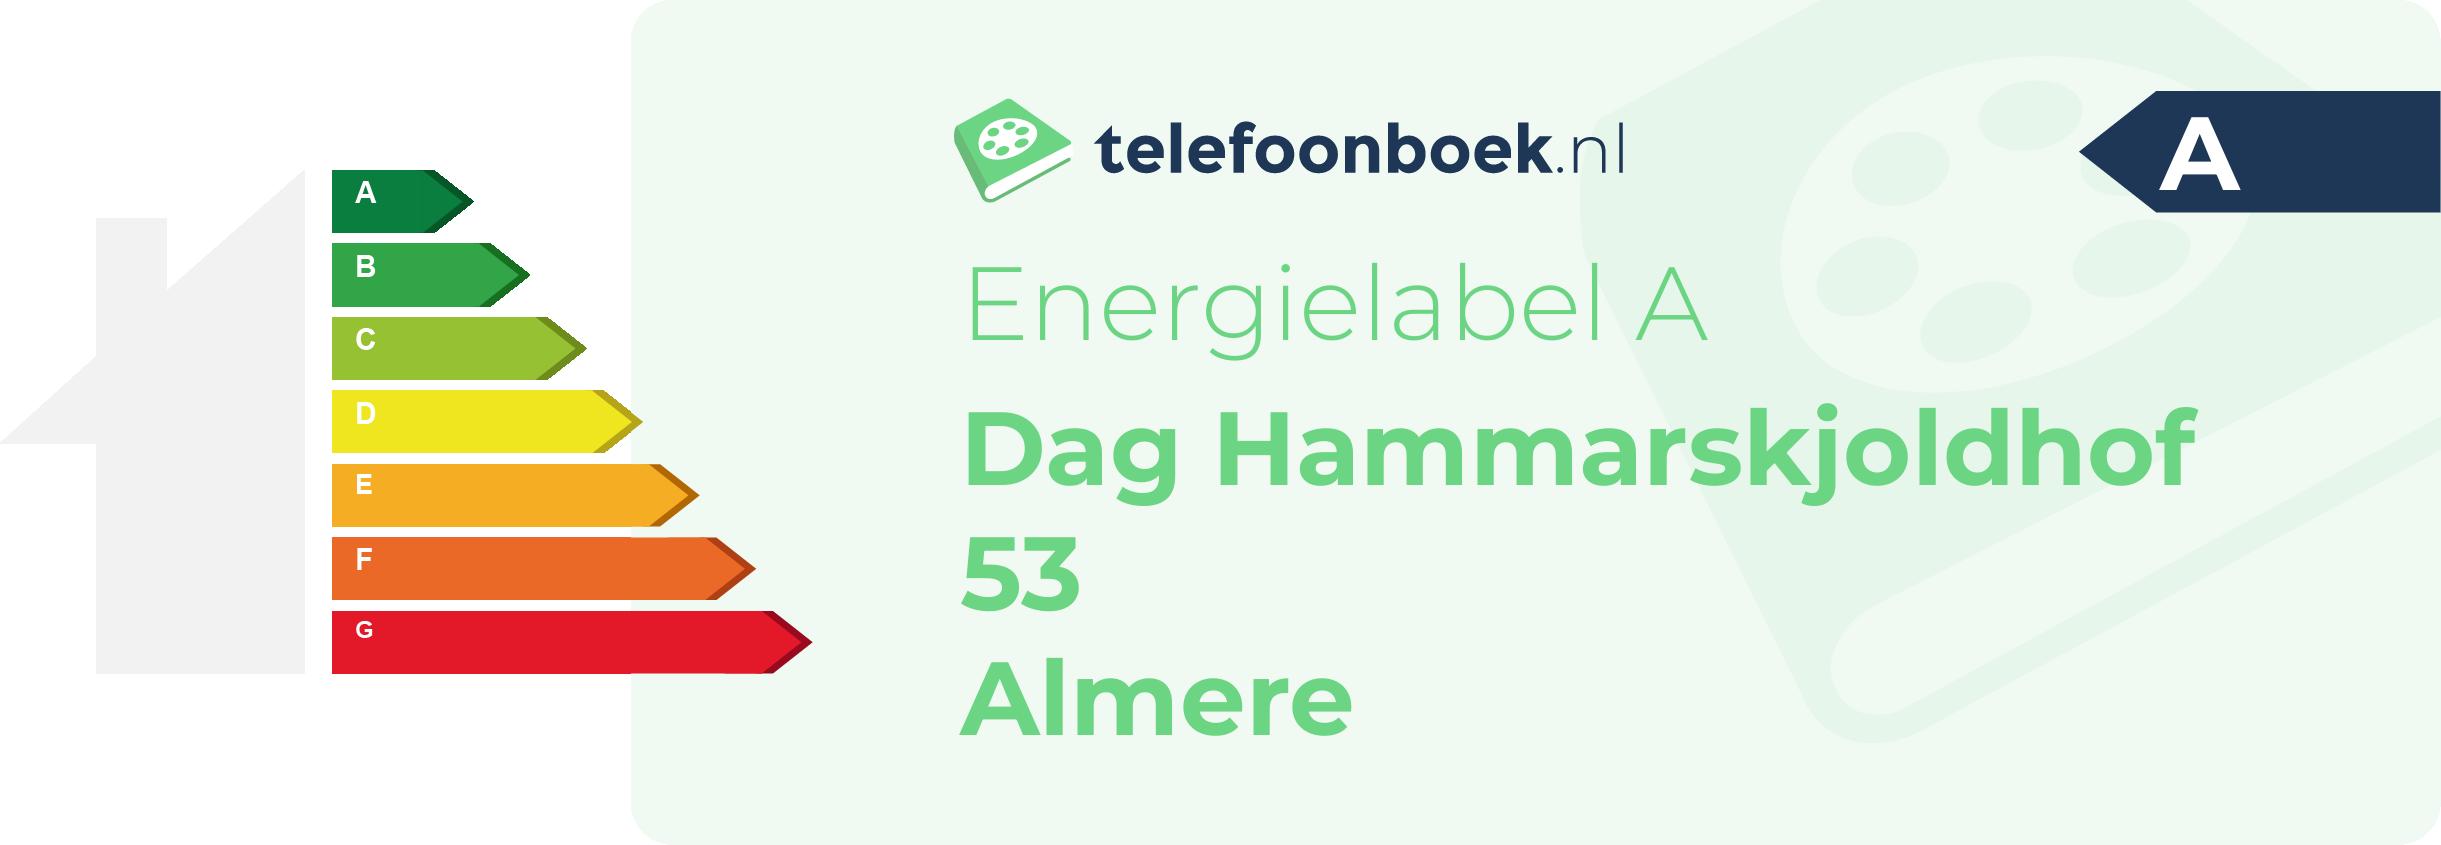 Energielabel Dag Hammarskjoldhof 53 Almere